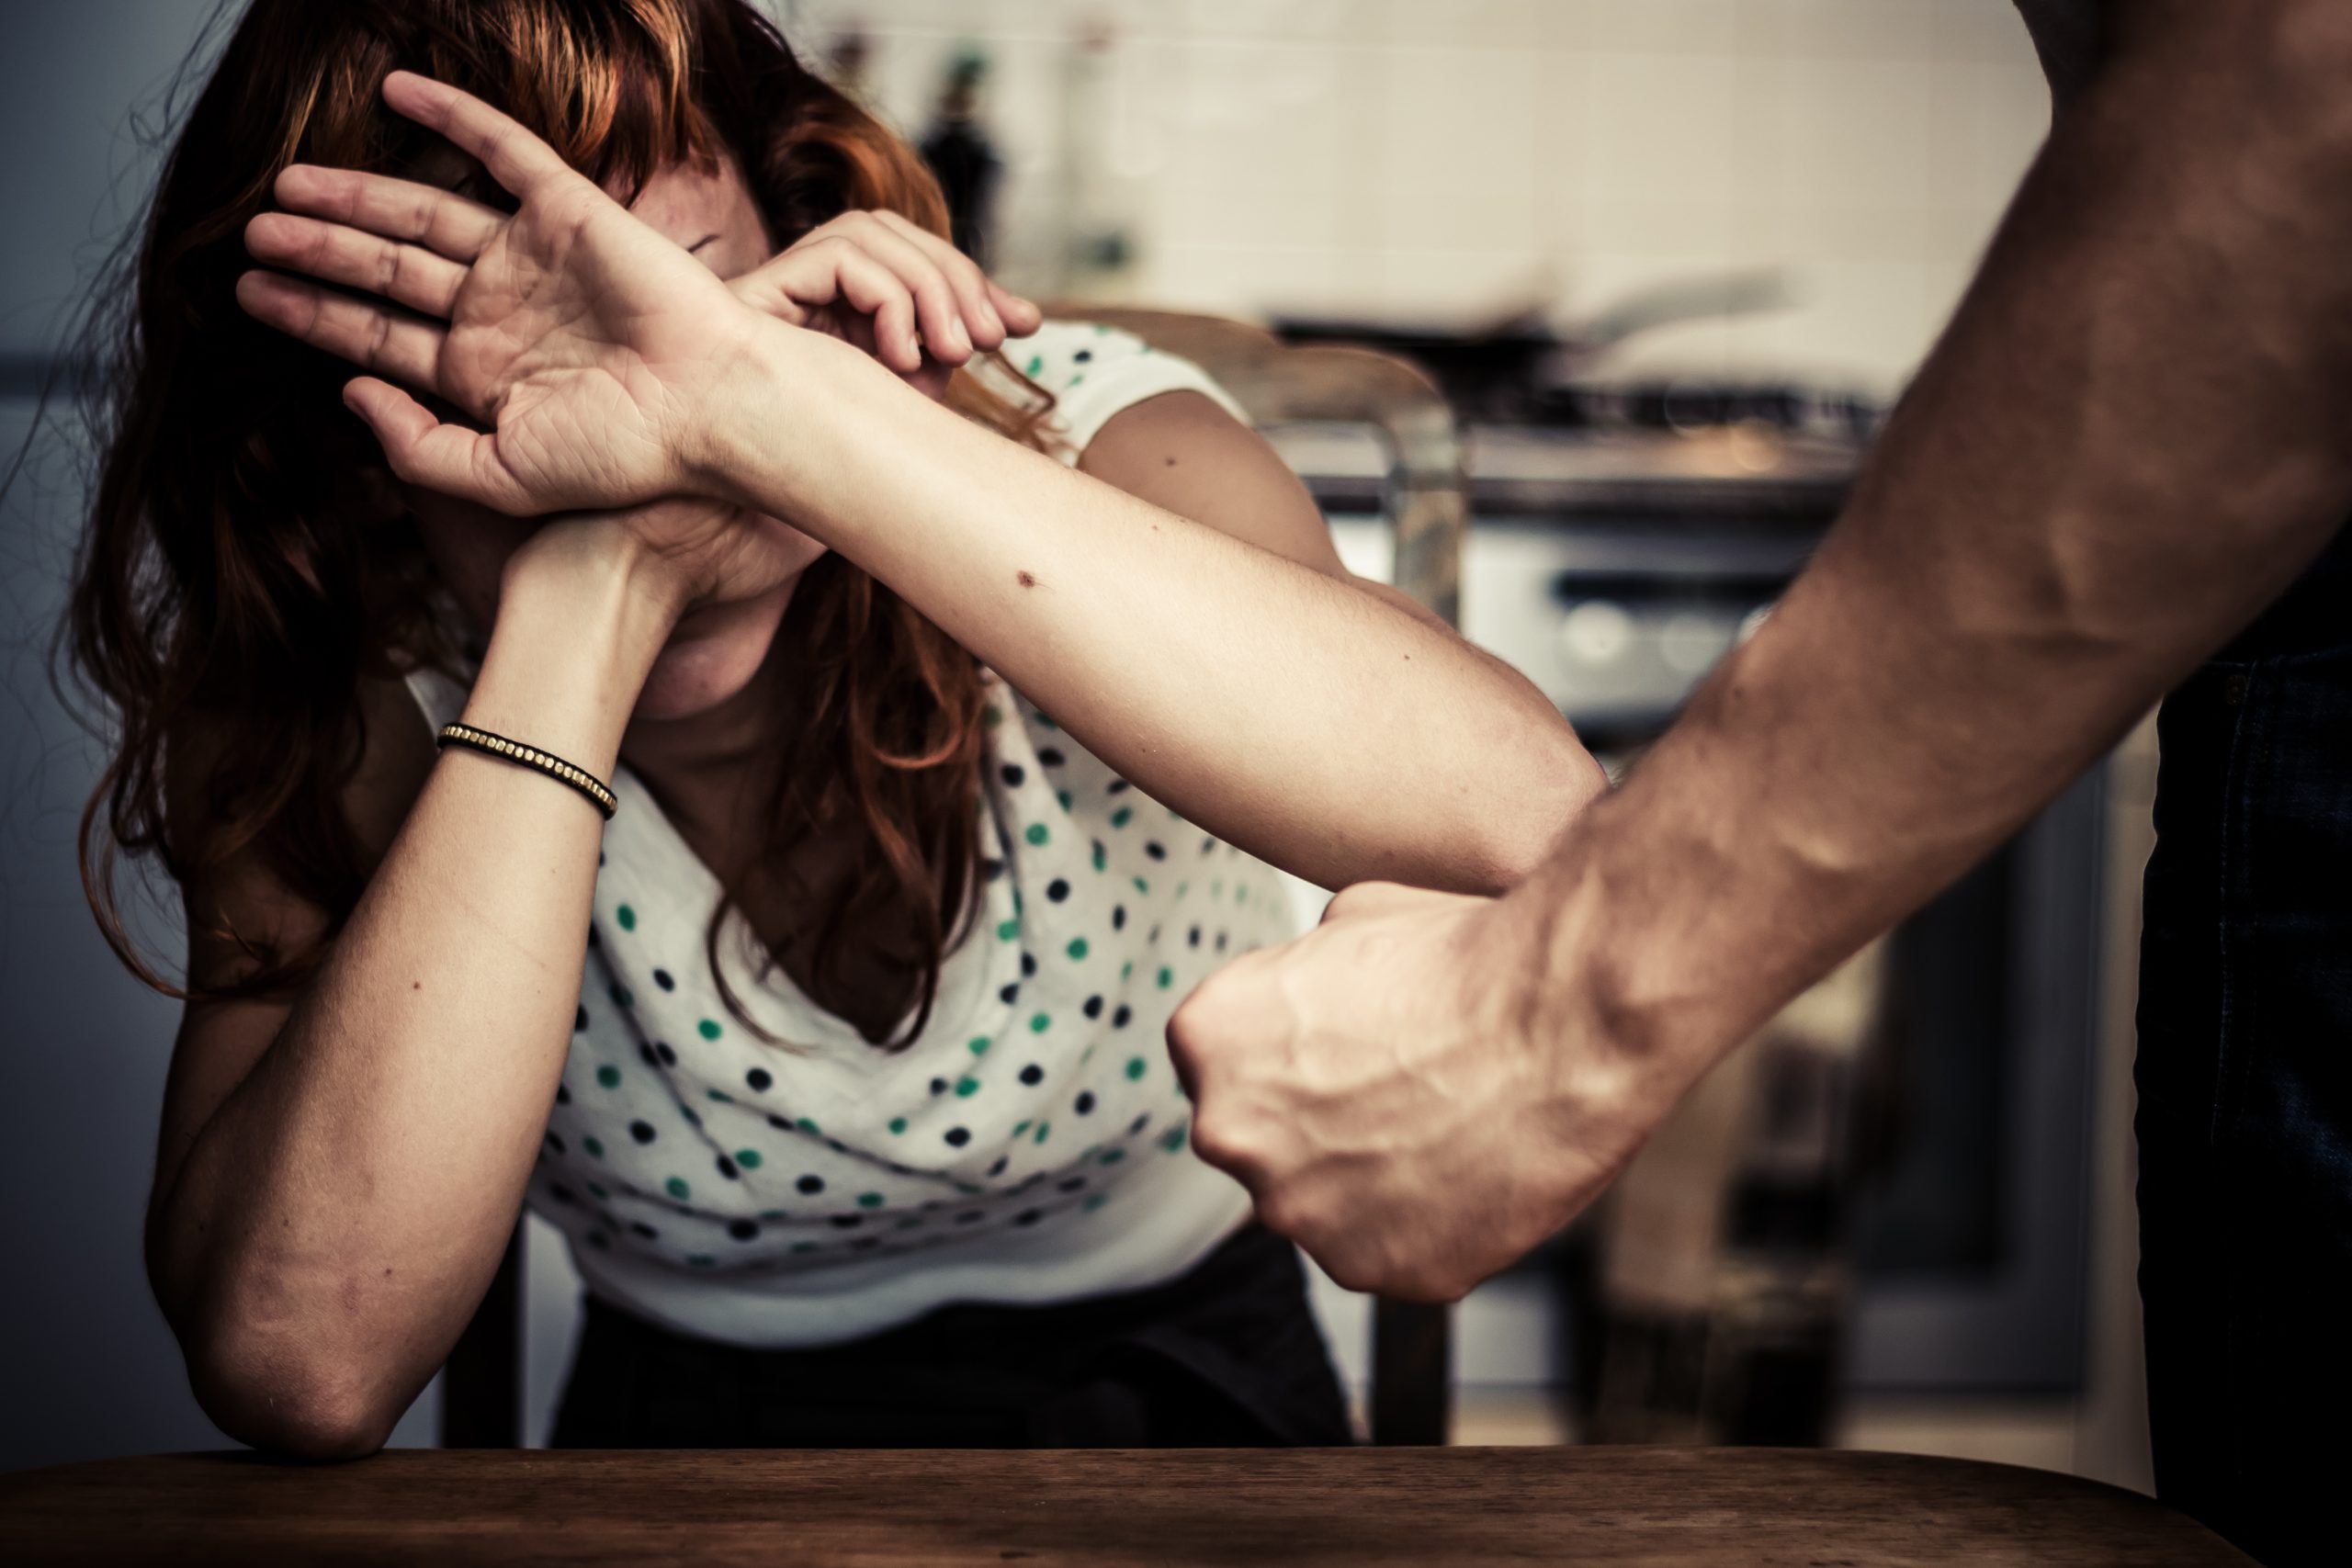 Government to publish domestic violence report